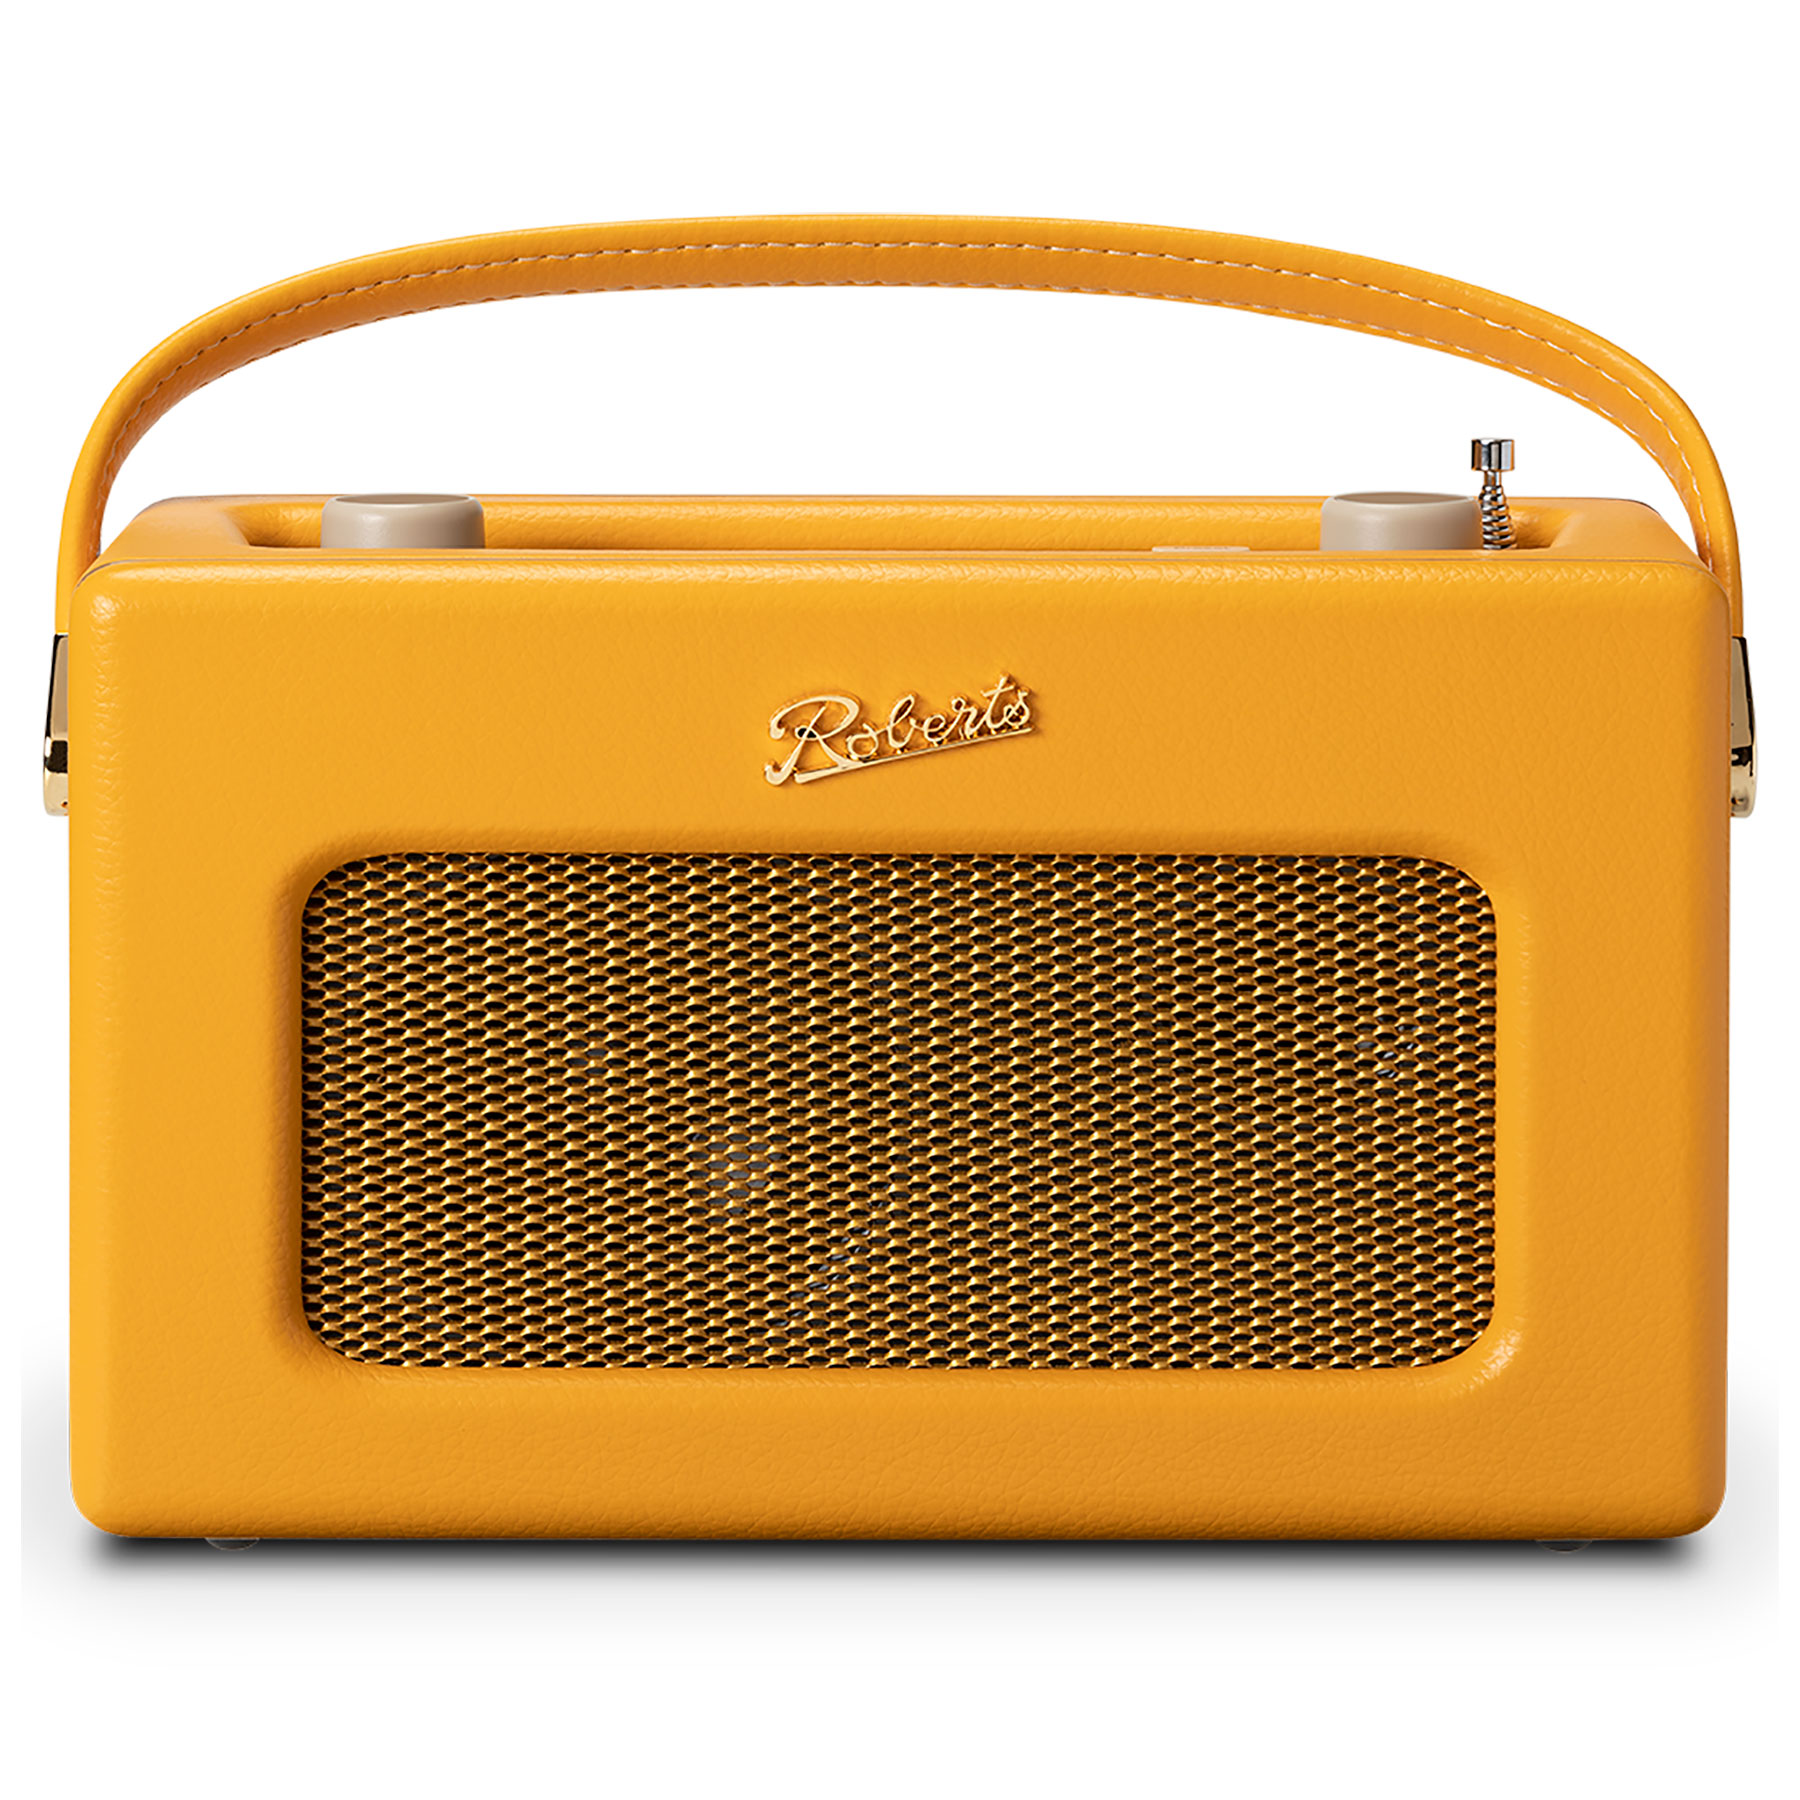 Roberts ISTREAMLSY Revival Smart DAB FM Radio with Alexa in Yellow